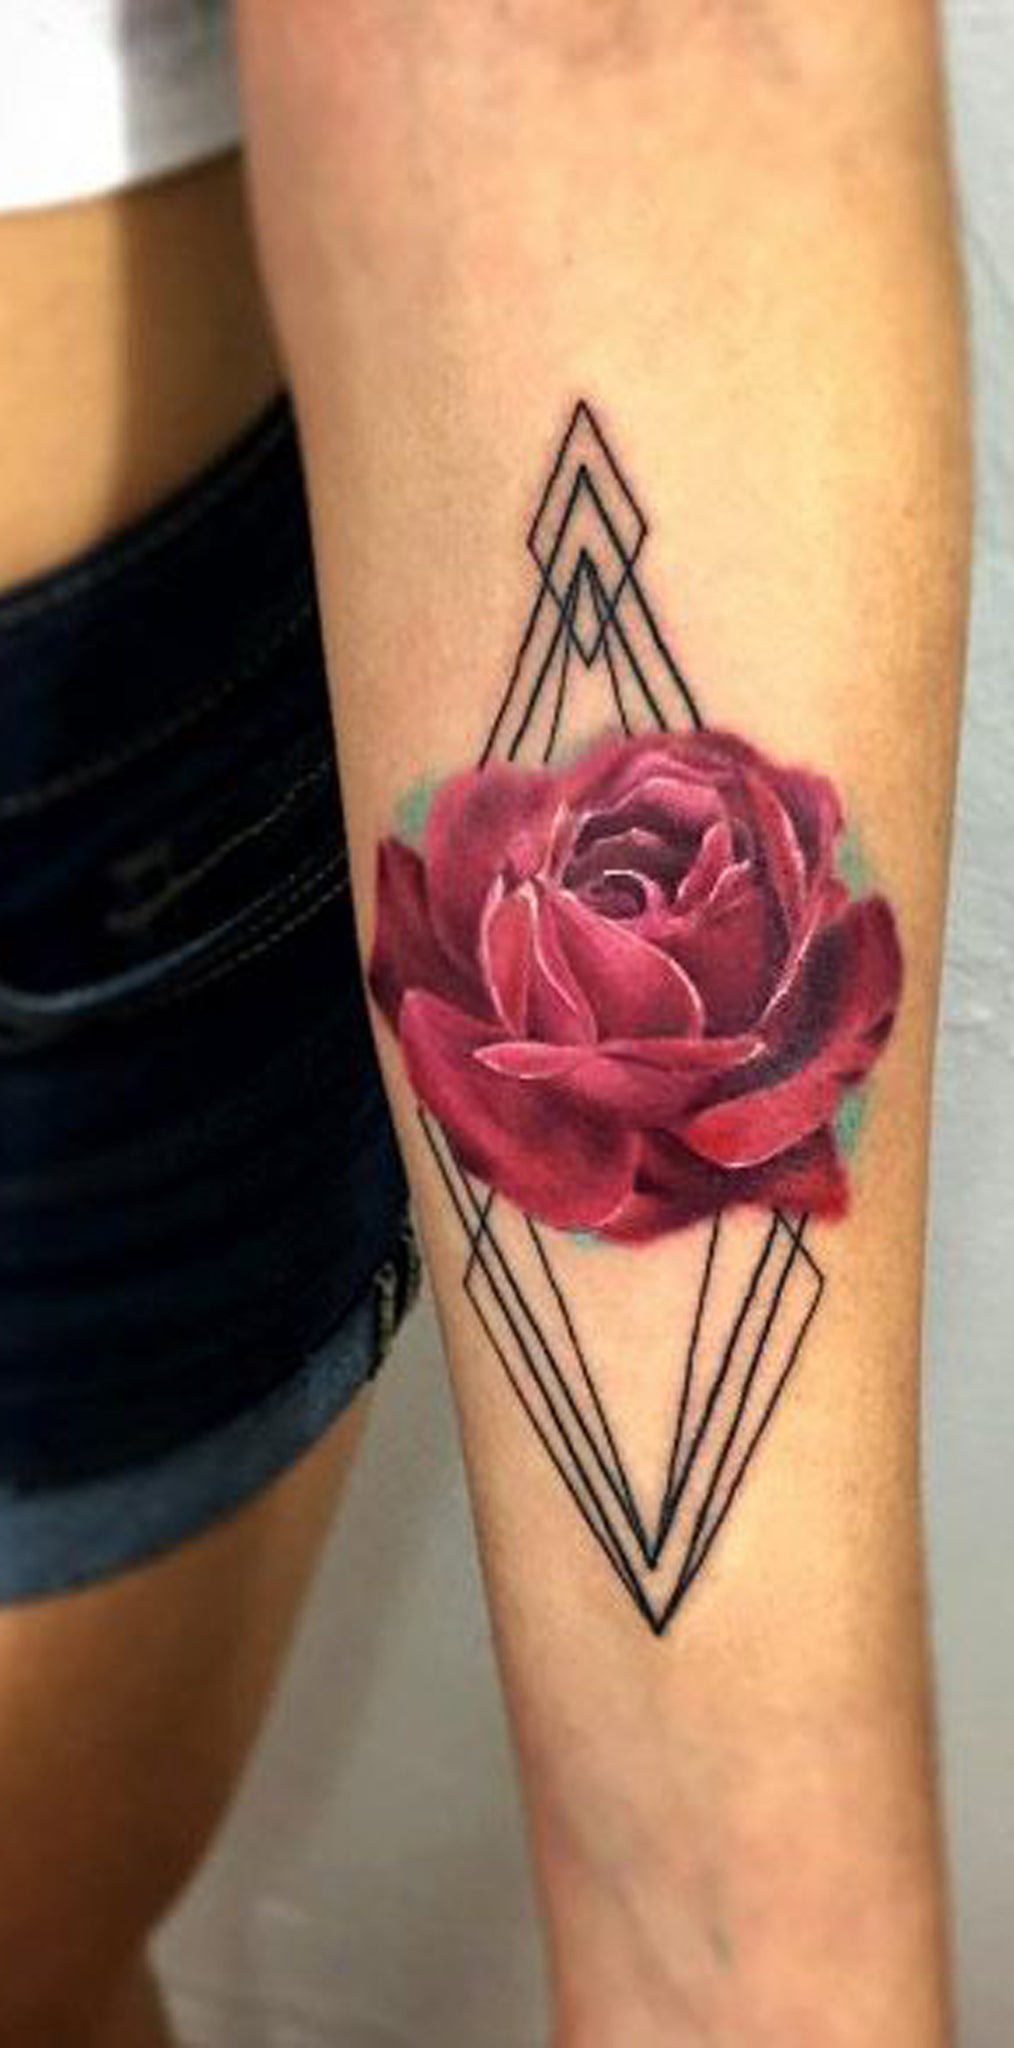 Geometric Watercolor Rose Forearm Tattoo Ideas for Women - Diamond Colorful Pink Red Floral Flower Arm Sleeve Tat -  ideas geométricas del tatuaje del brazo color de rosa para las mujeres - www.MyBodiArt.com